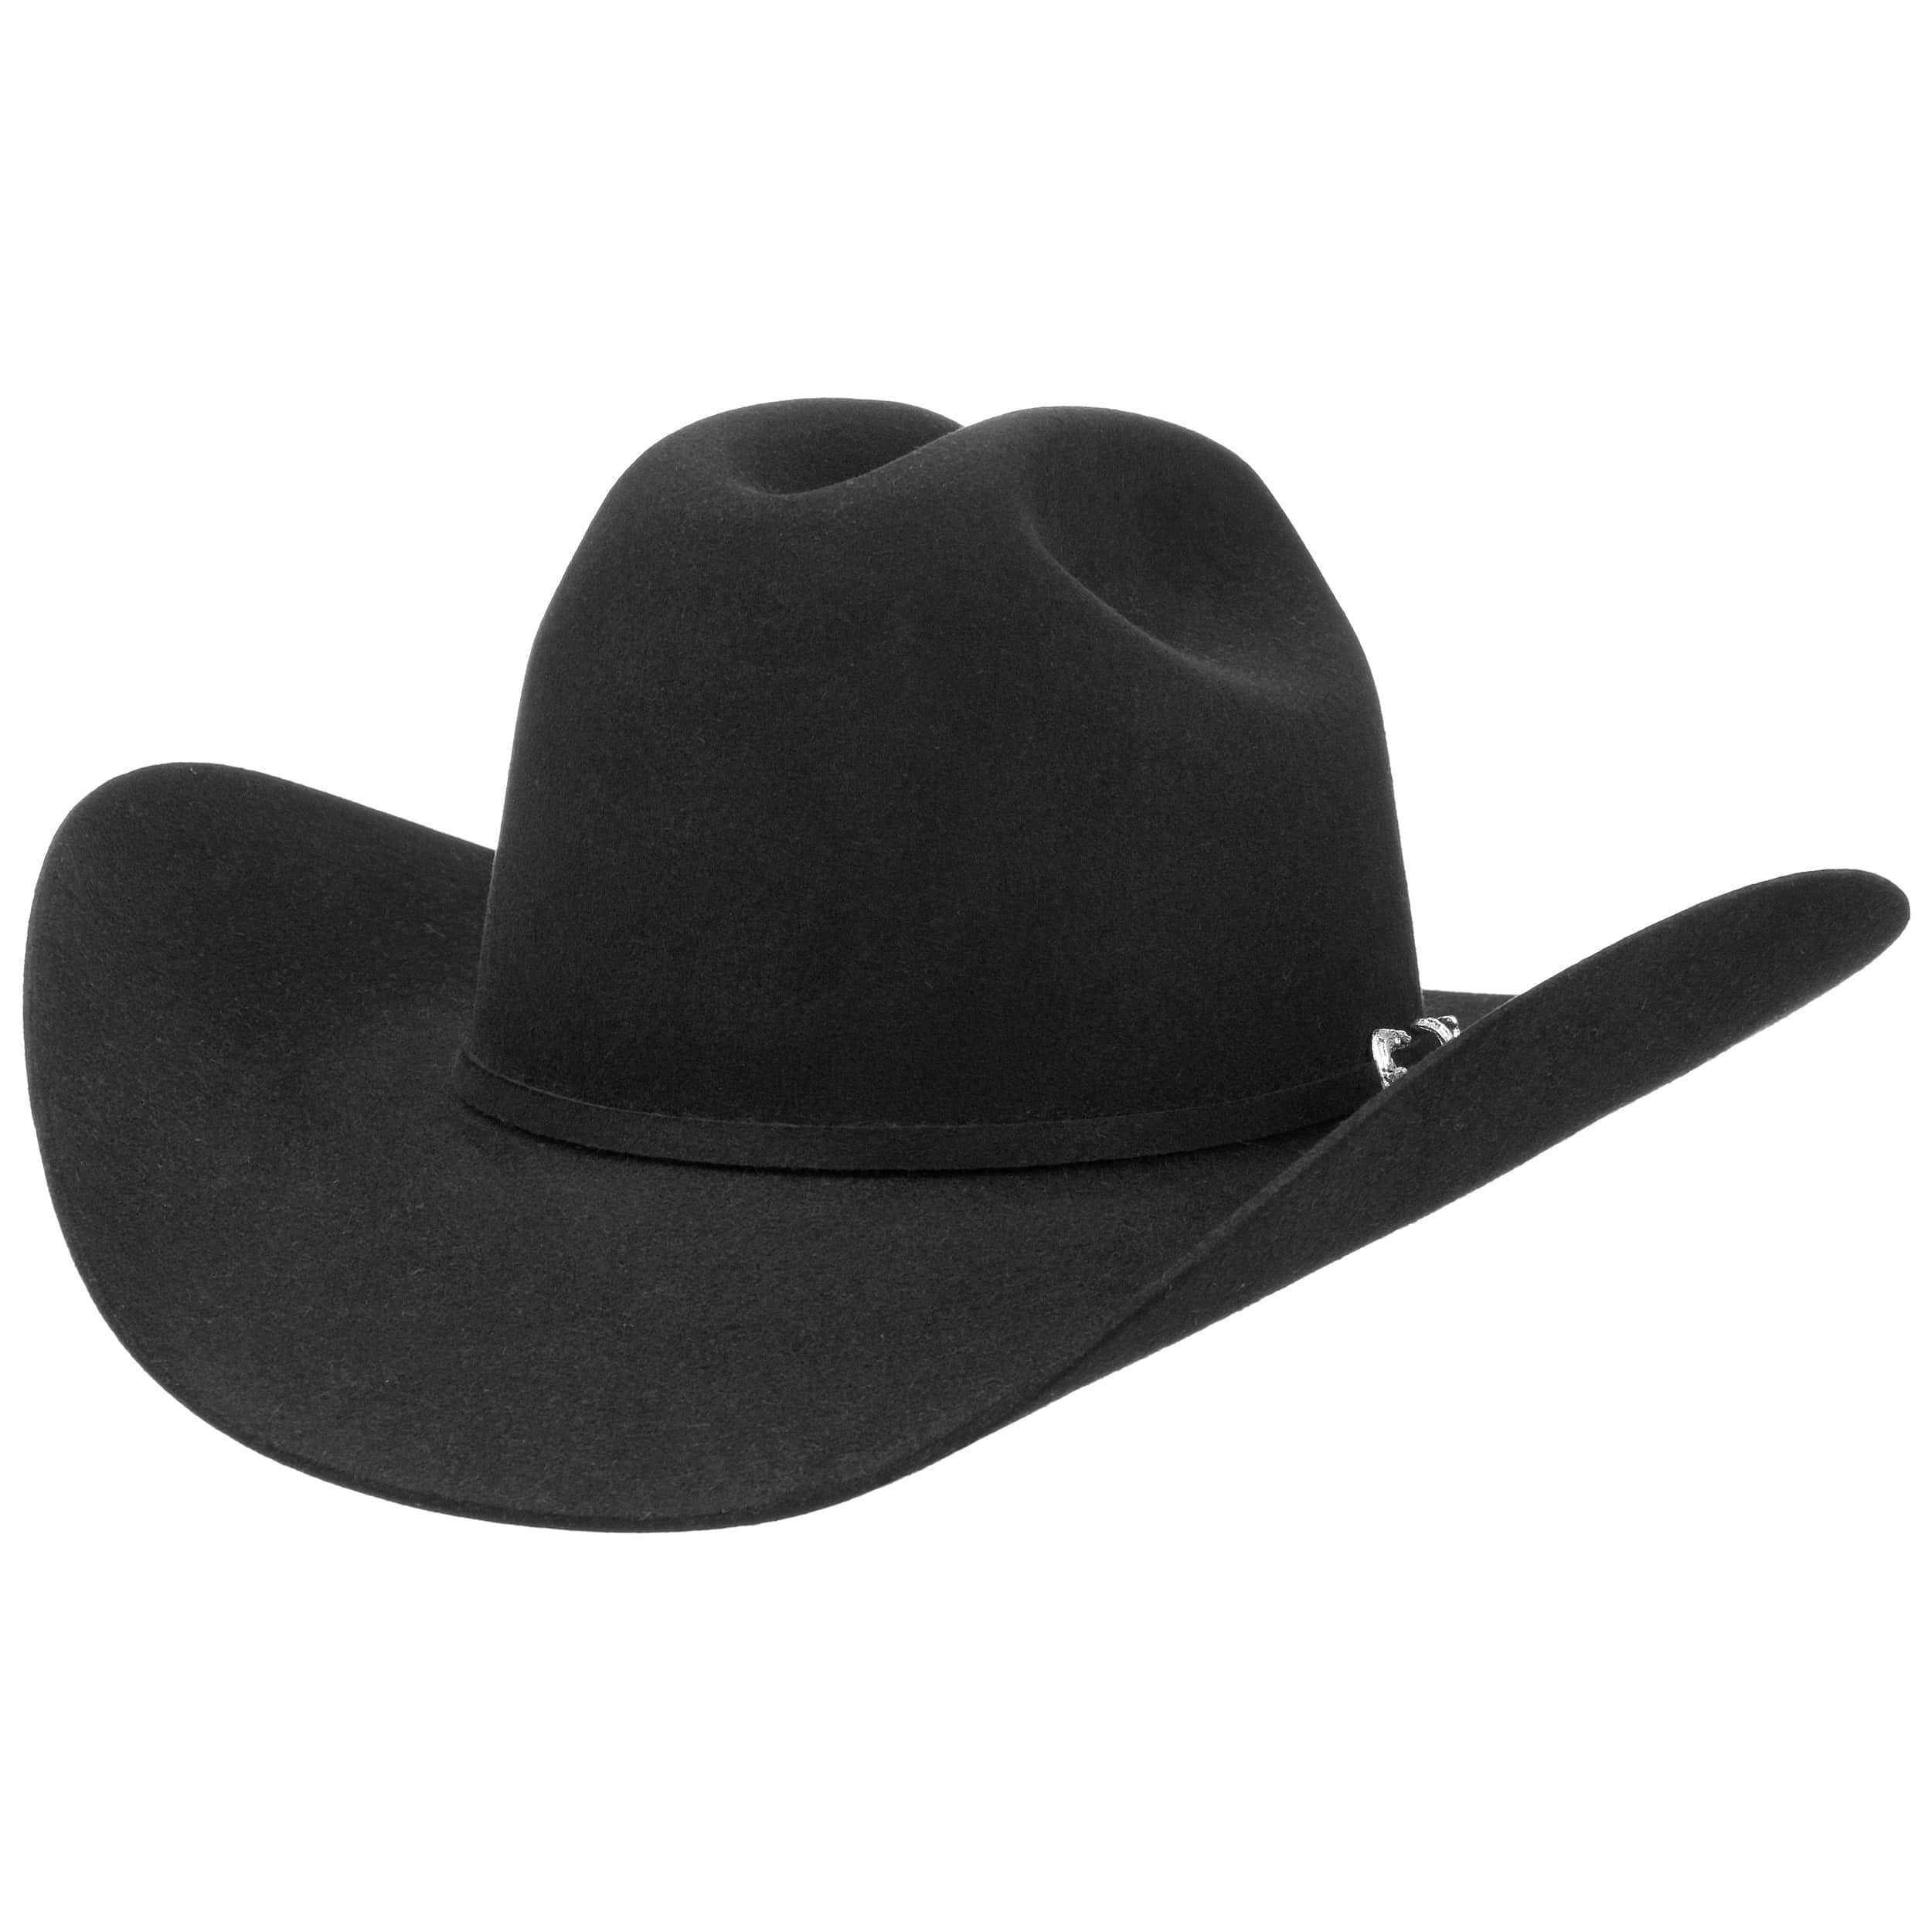 Sombrero de Vaquero Lariat 5X Stetson - 469,00 €